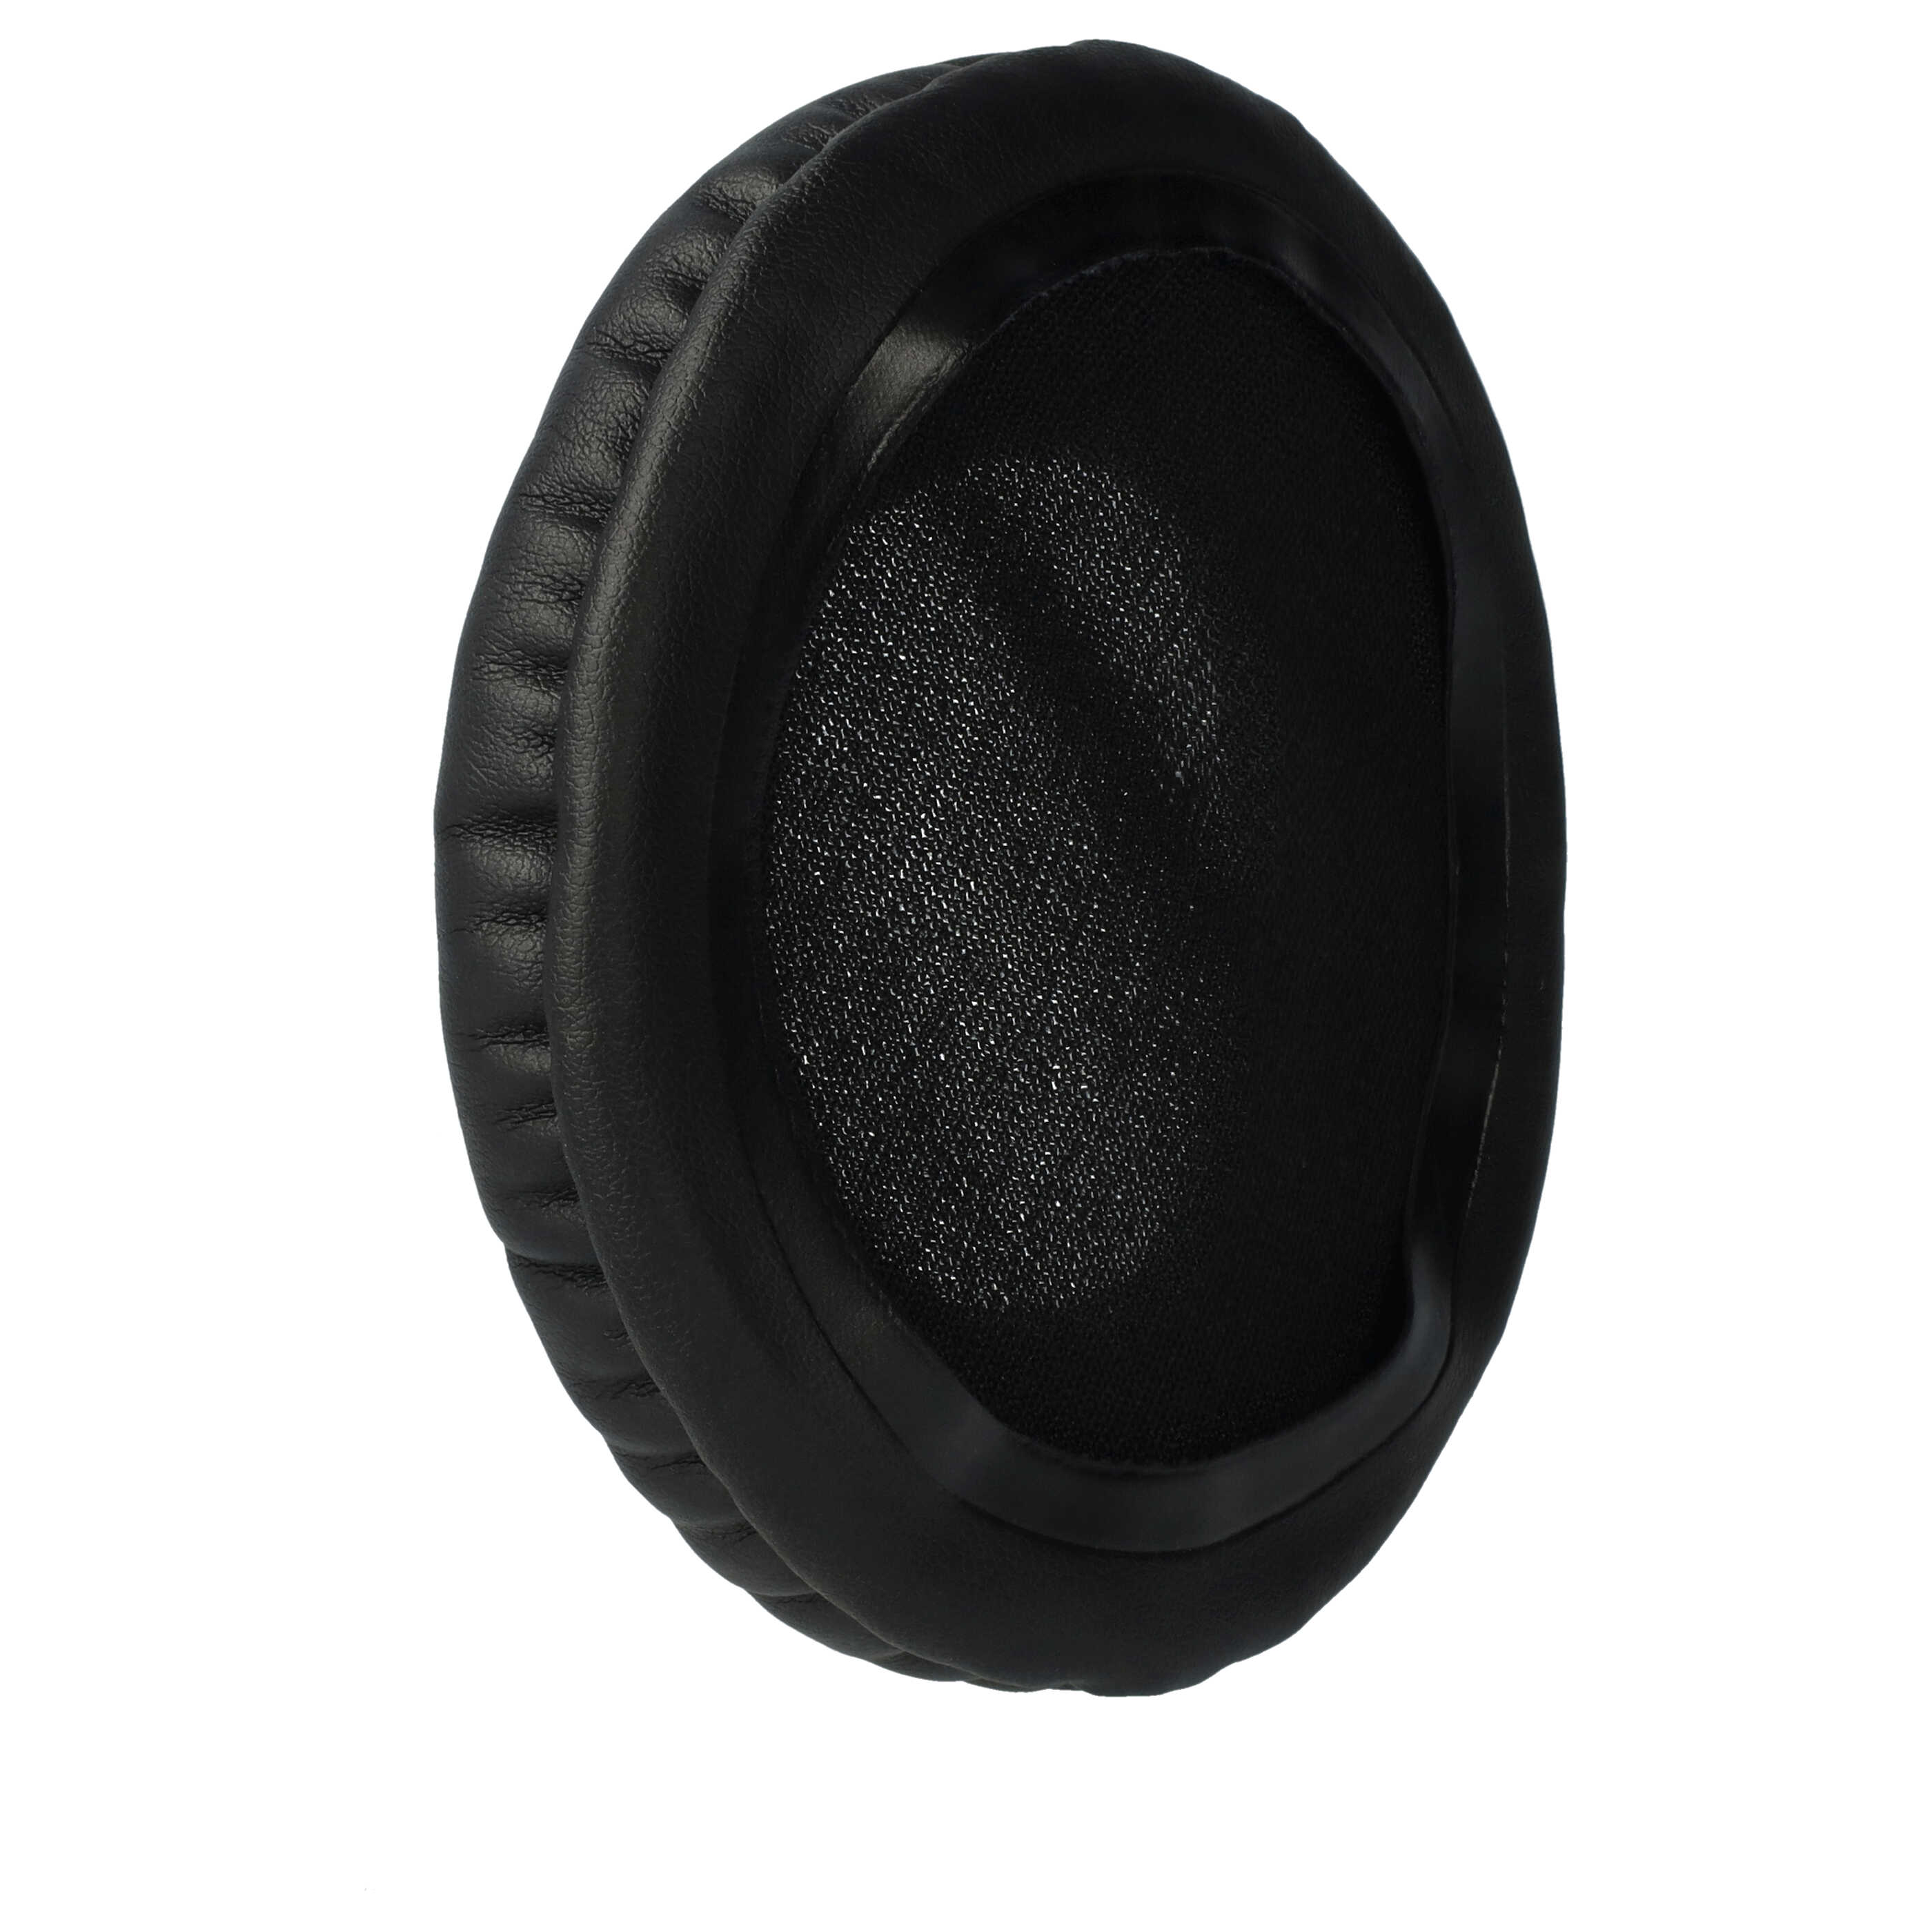 2x Ohrenpolster für Technics RP-DH1200 Kopfhörer u.a., 9,5 x 8,5 cm, Schwarz